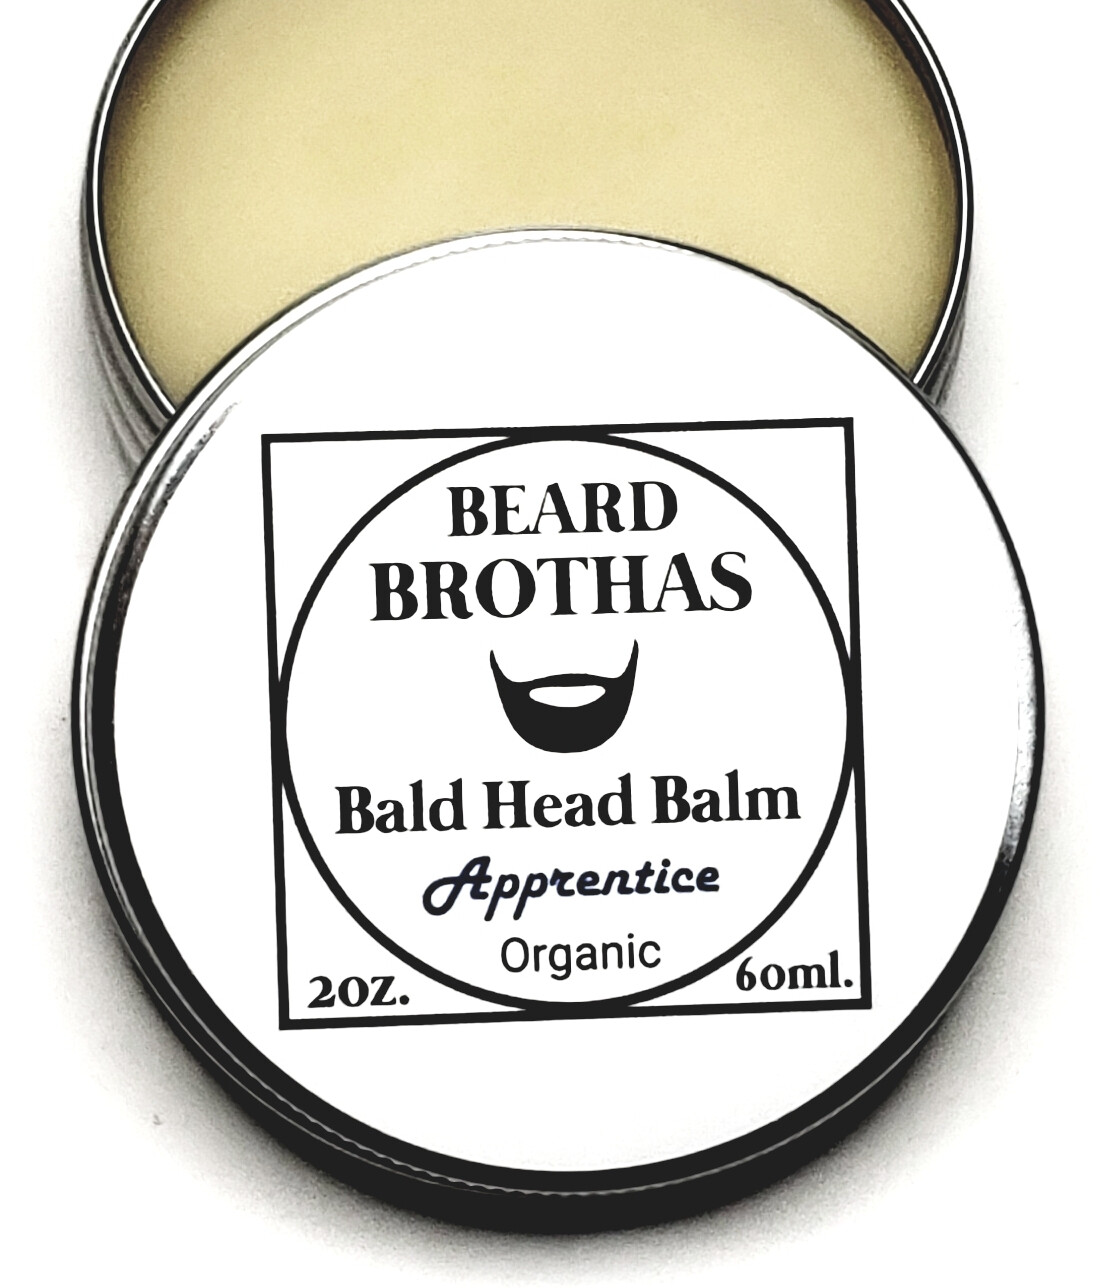 Premium Organic Bald Head Balm Moisturizer. Apprentice Scent.